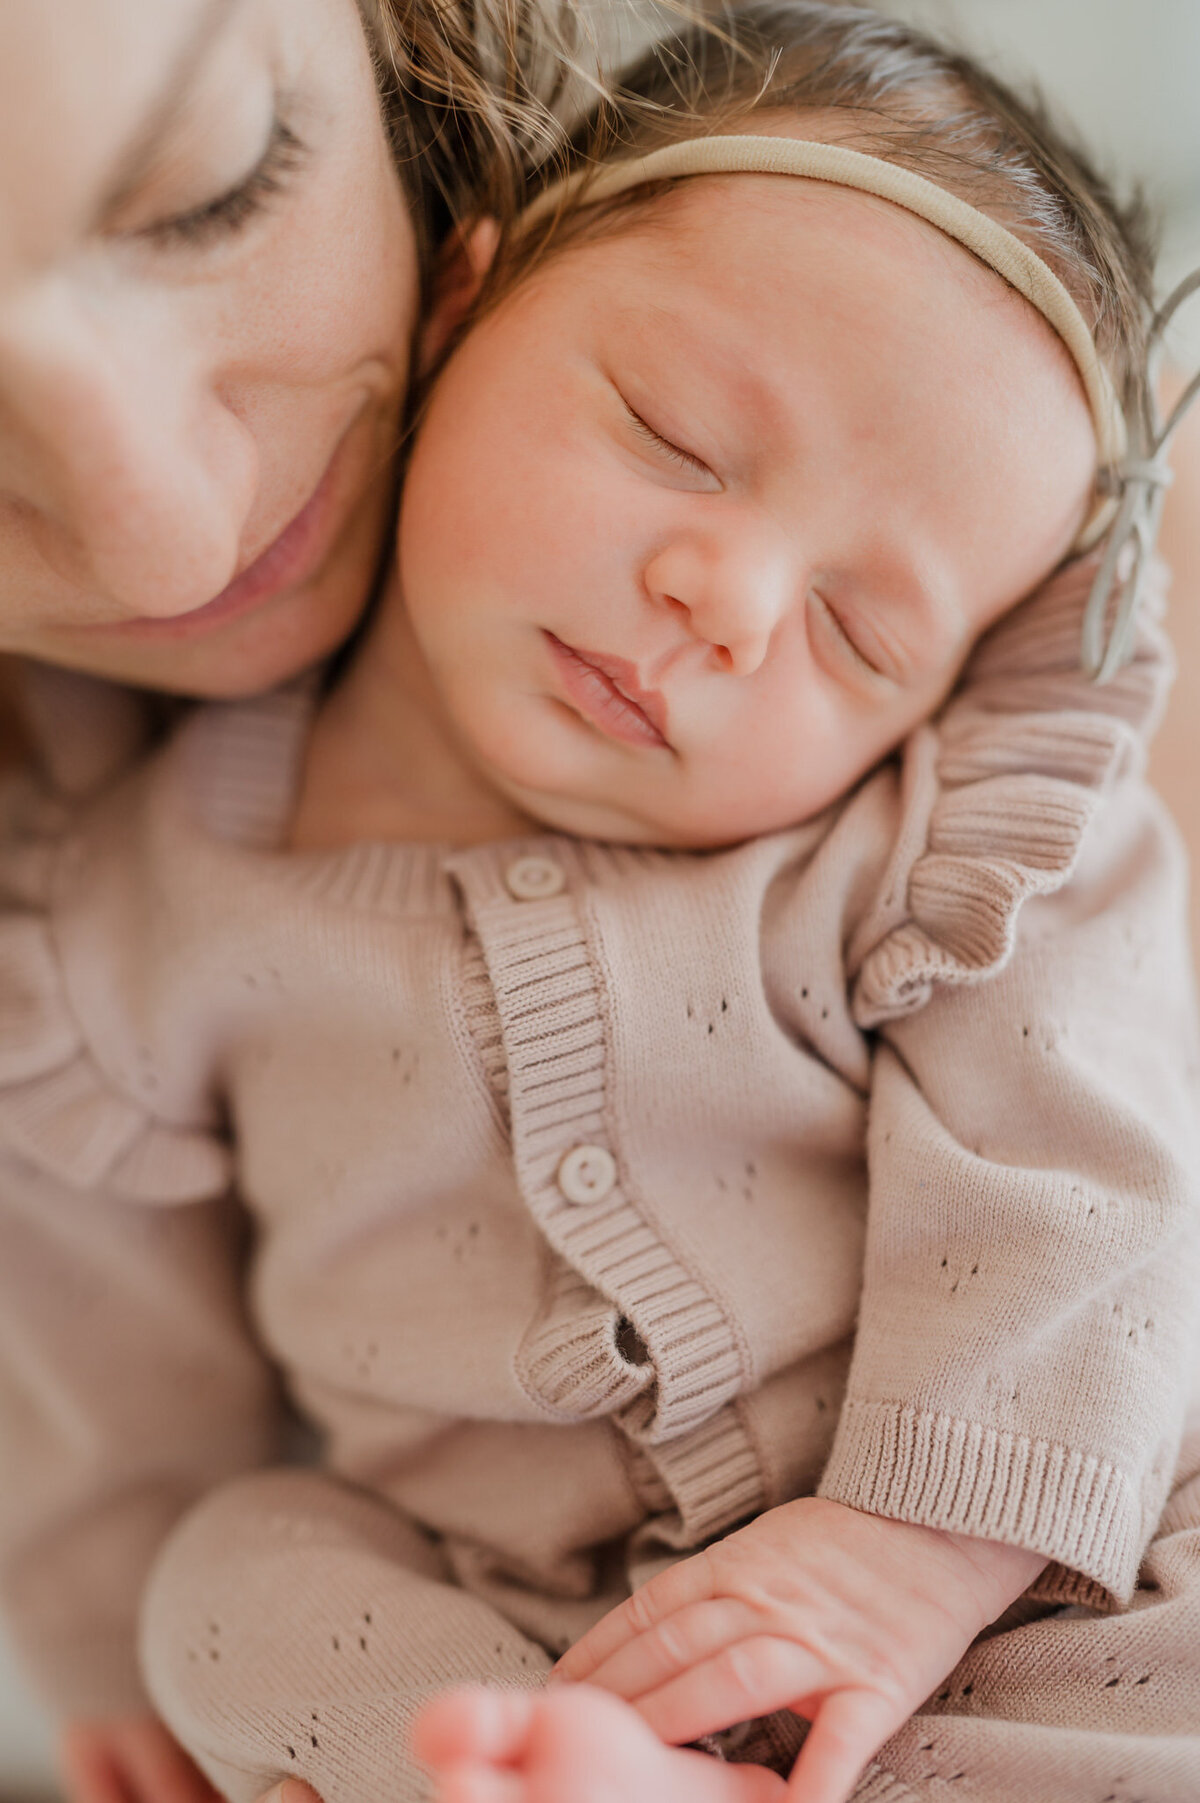 Mom nuzzles sleeping baby girl. Close up photo by newborn photographer Cassy Golden.